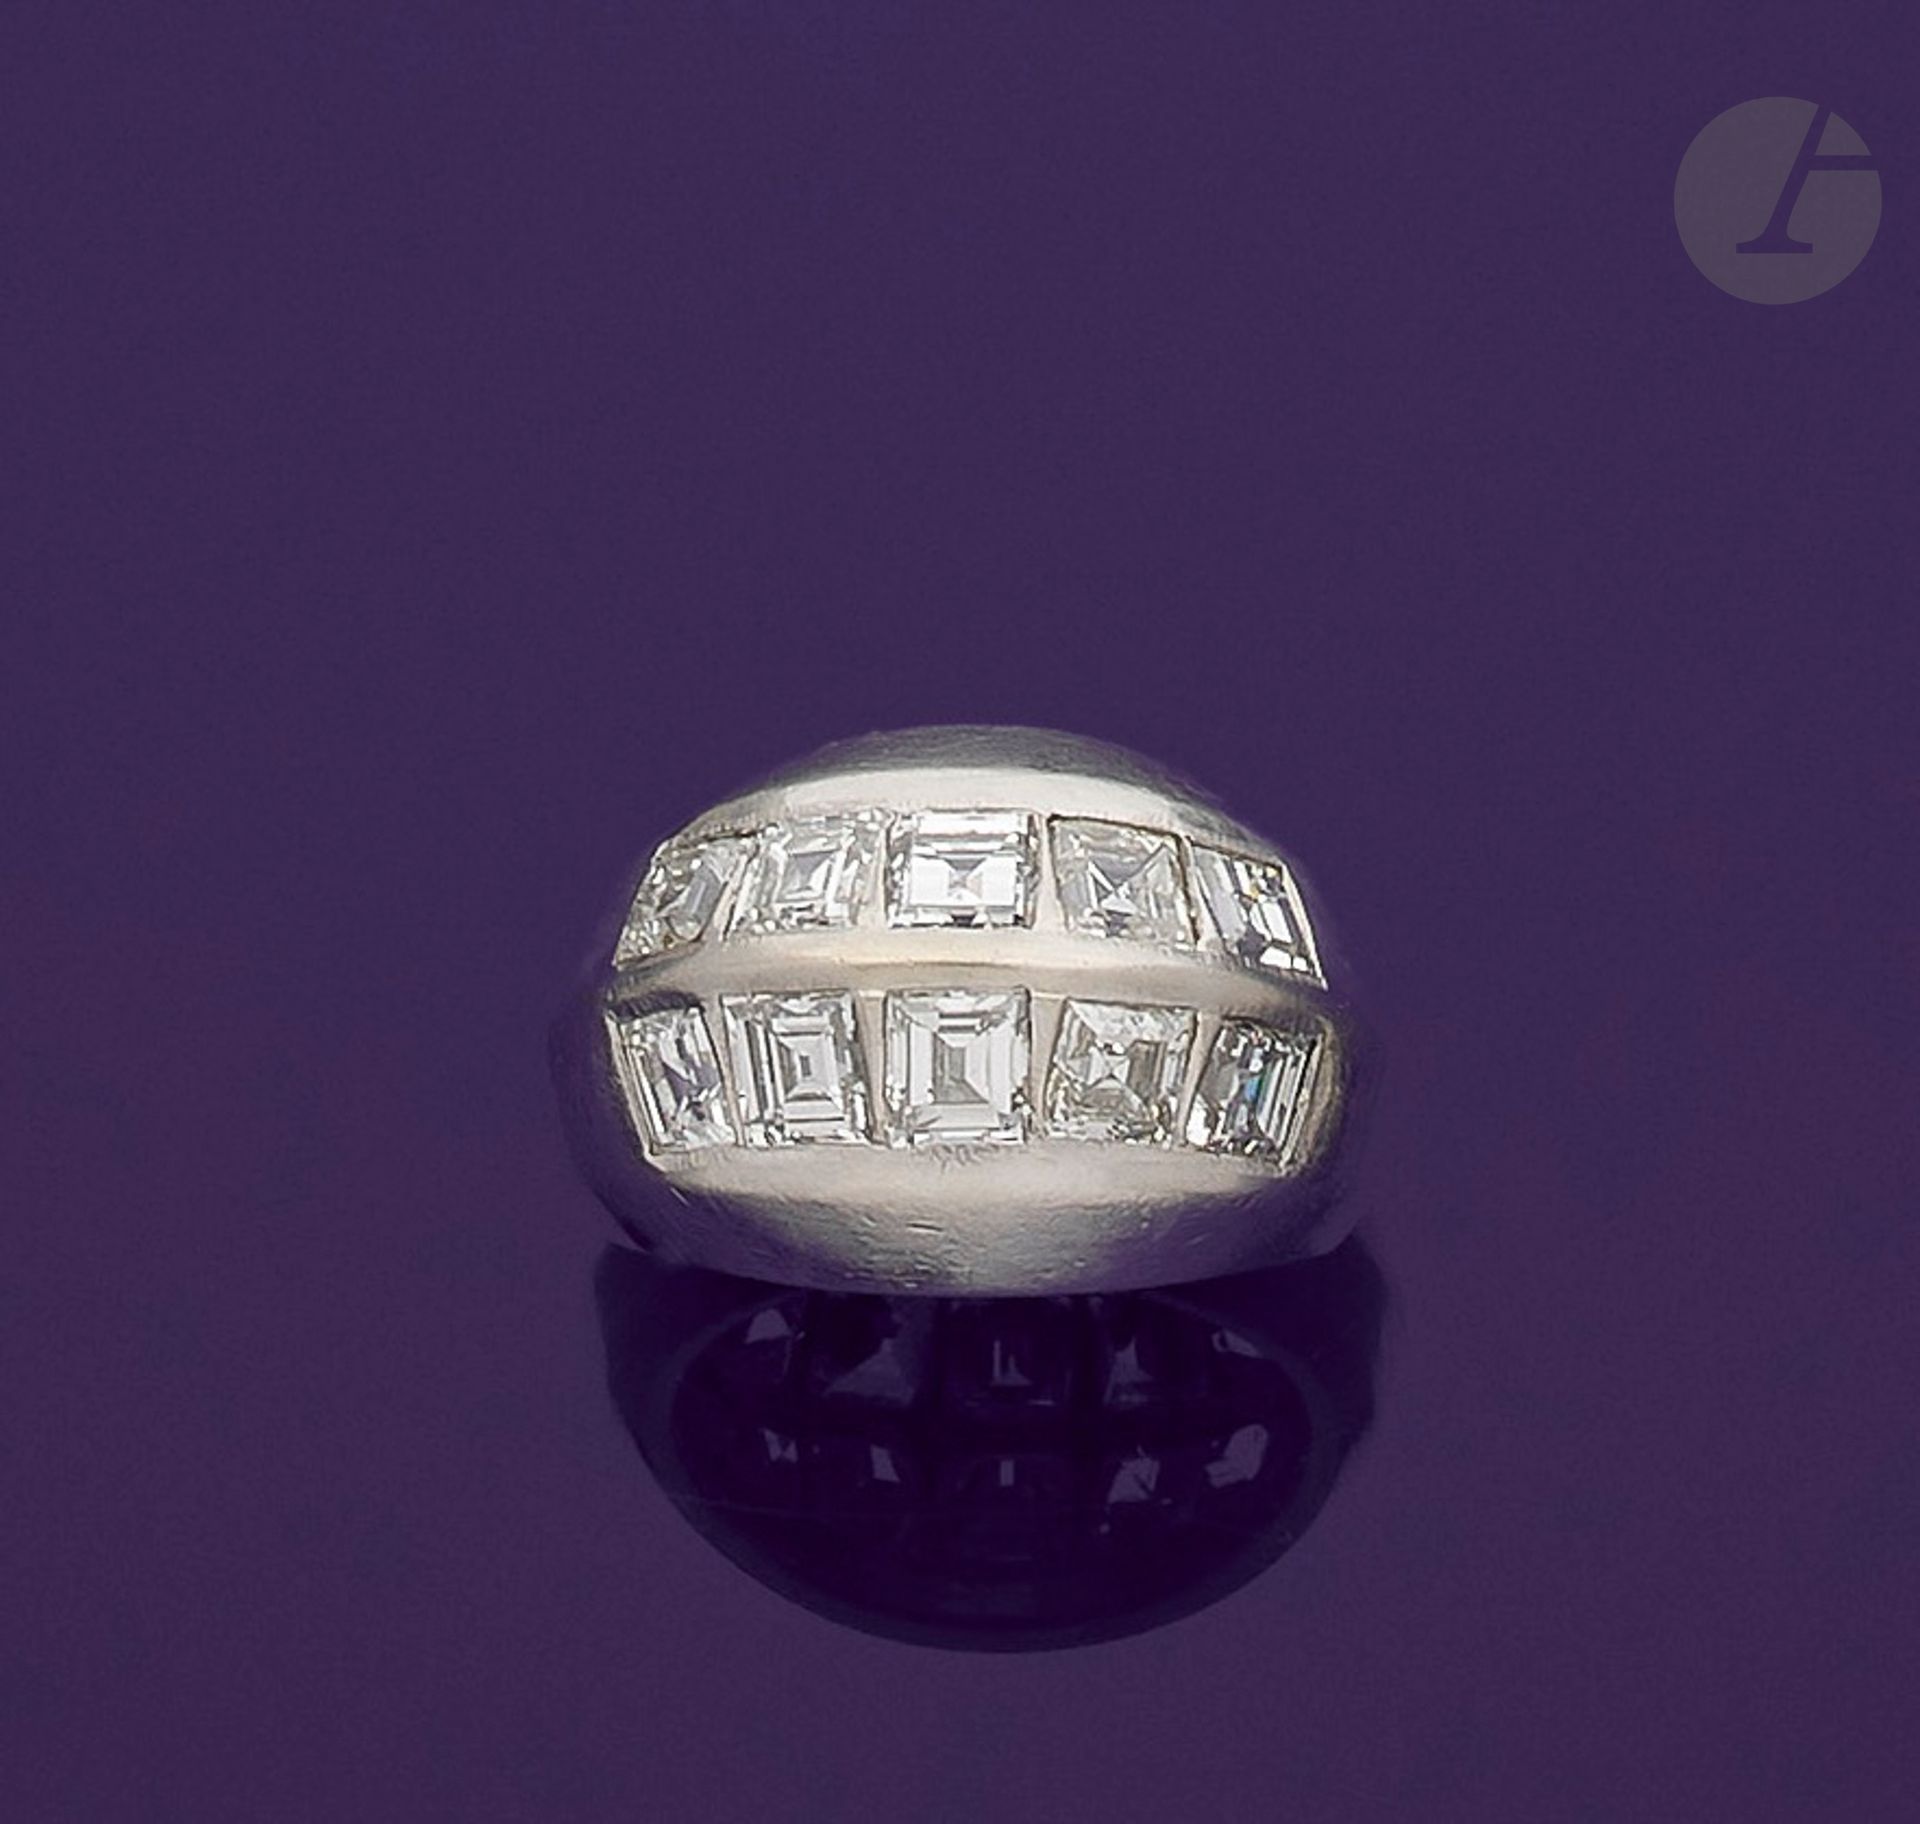 Null 铂金戒指，镶有两行5颗校准的钻石。1930年代的作品。手指尺寸：56。毛重 : 16,5 g (震惊)

一枚1930年的钻石戒指